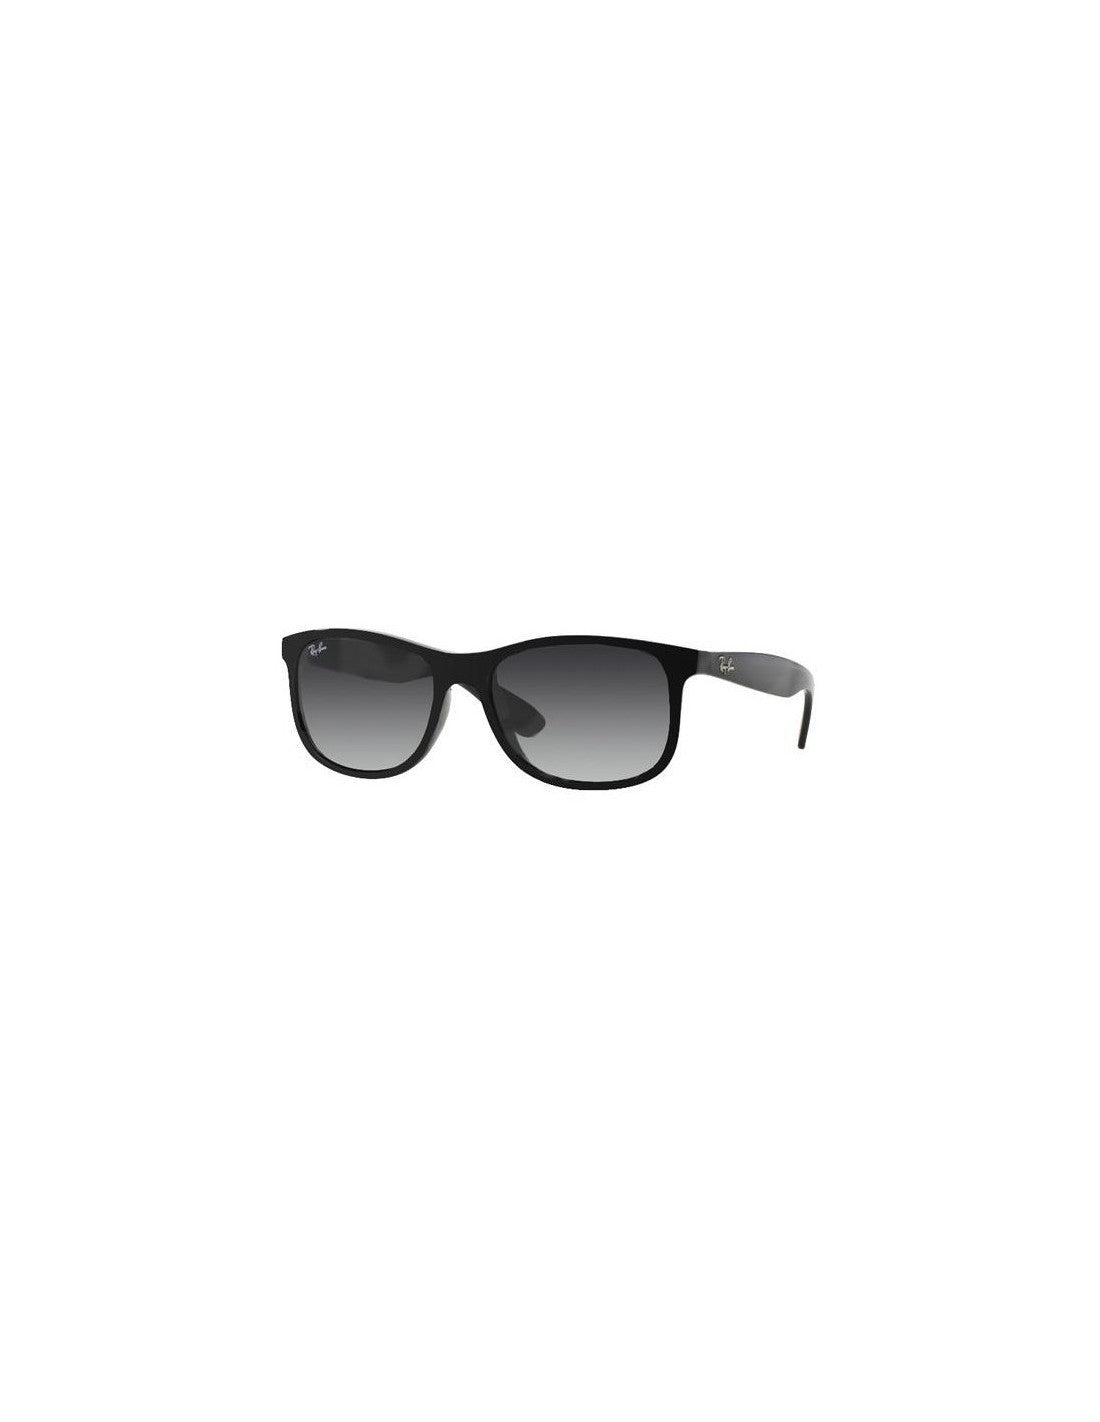 Ray Ban RB4202-601-8G-55  New Sunglasses